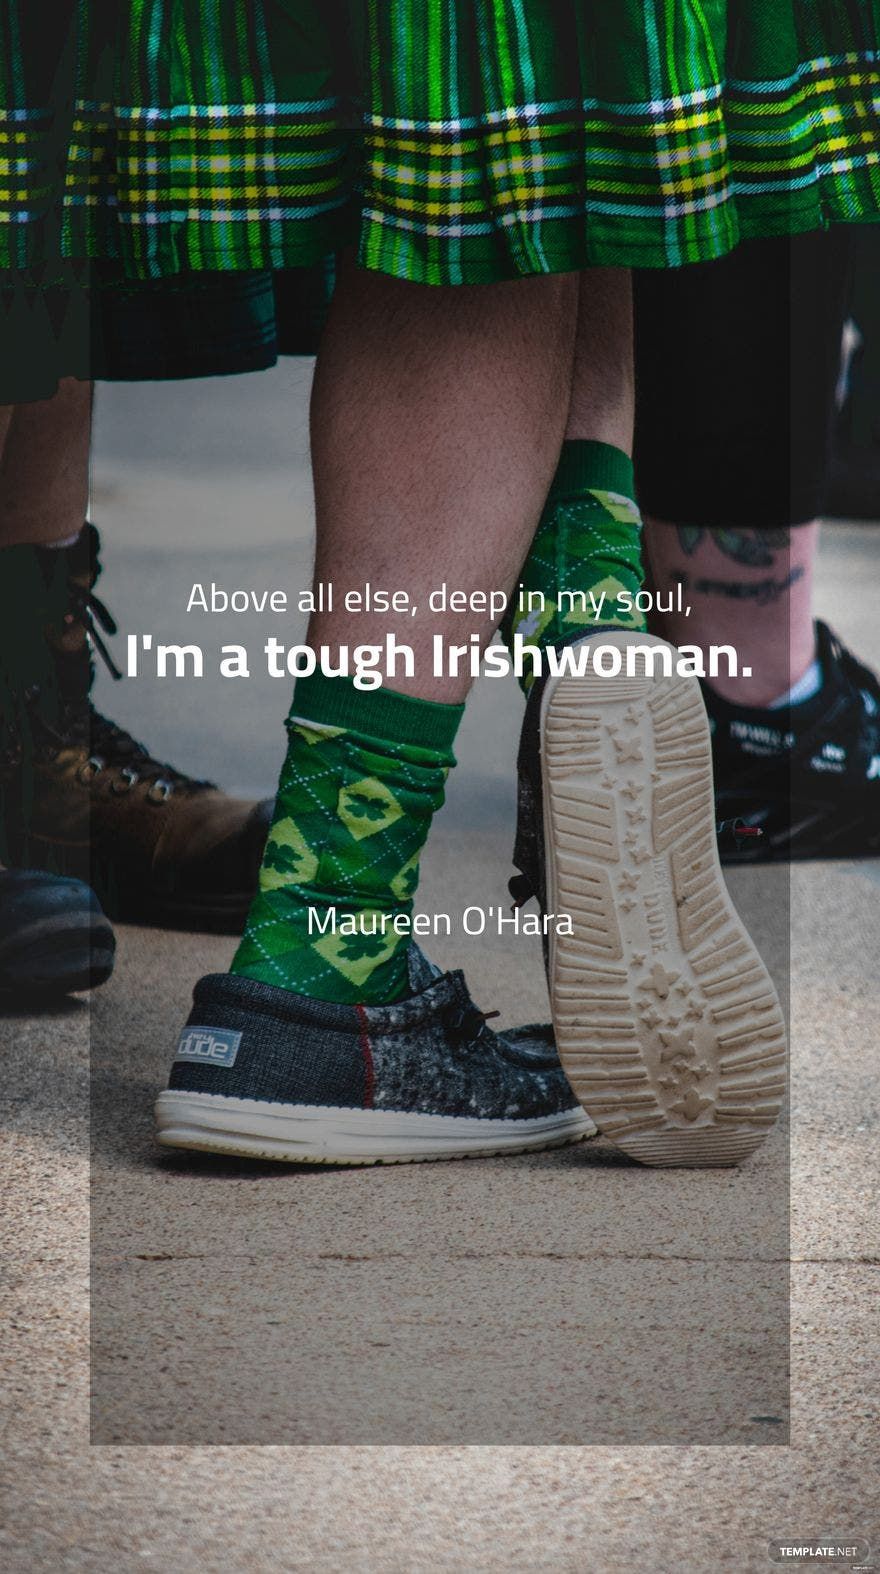 Maureen O'Hara - Above all else, deep in my soul, I'm a tough Irishwoman. in JPEG